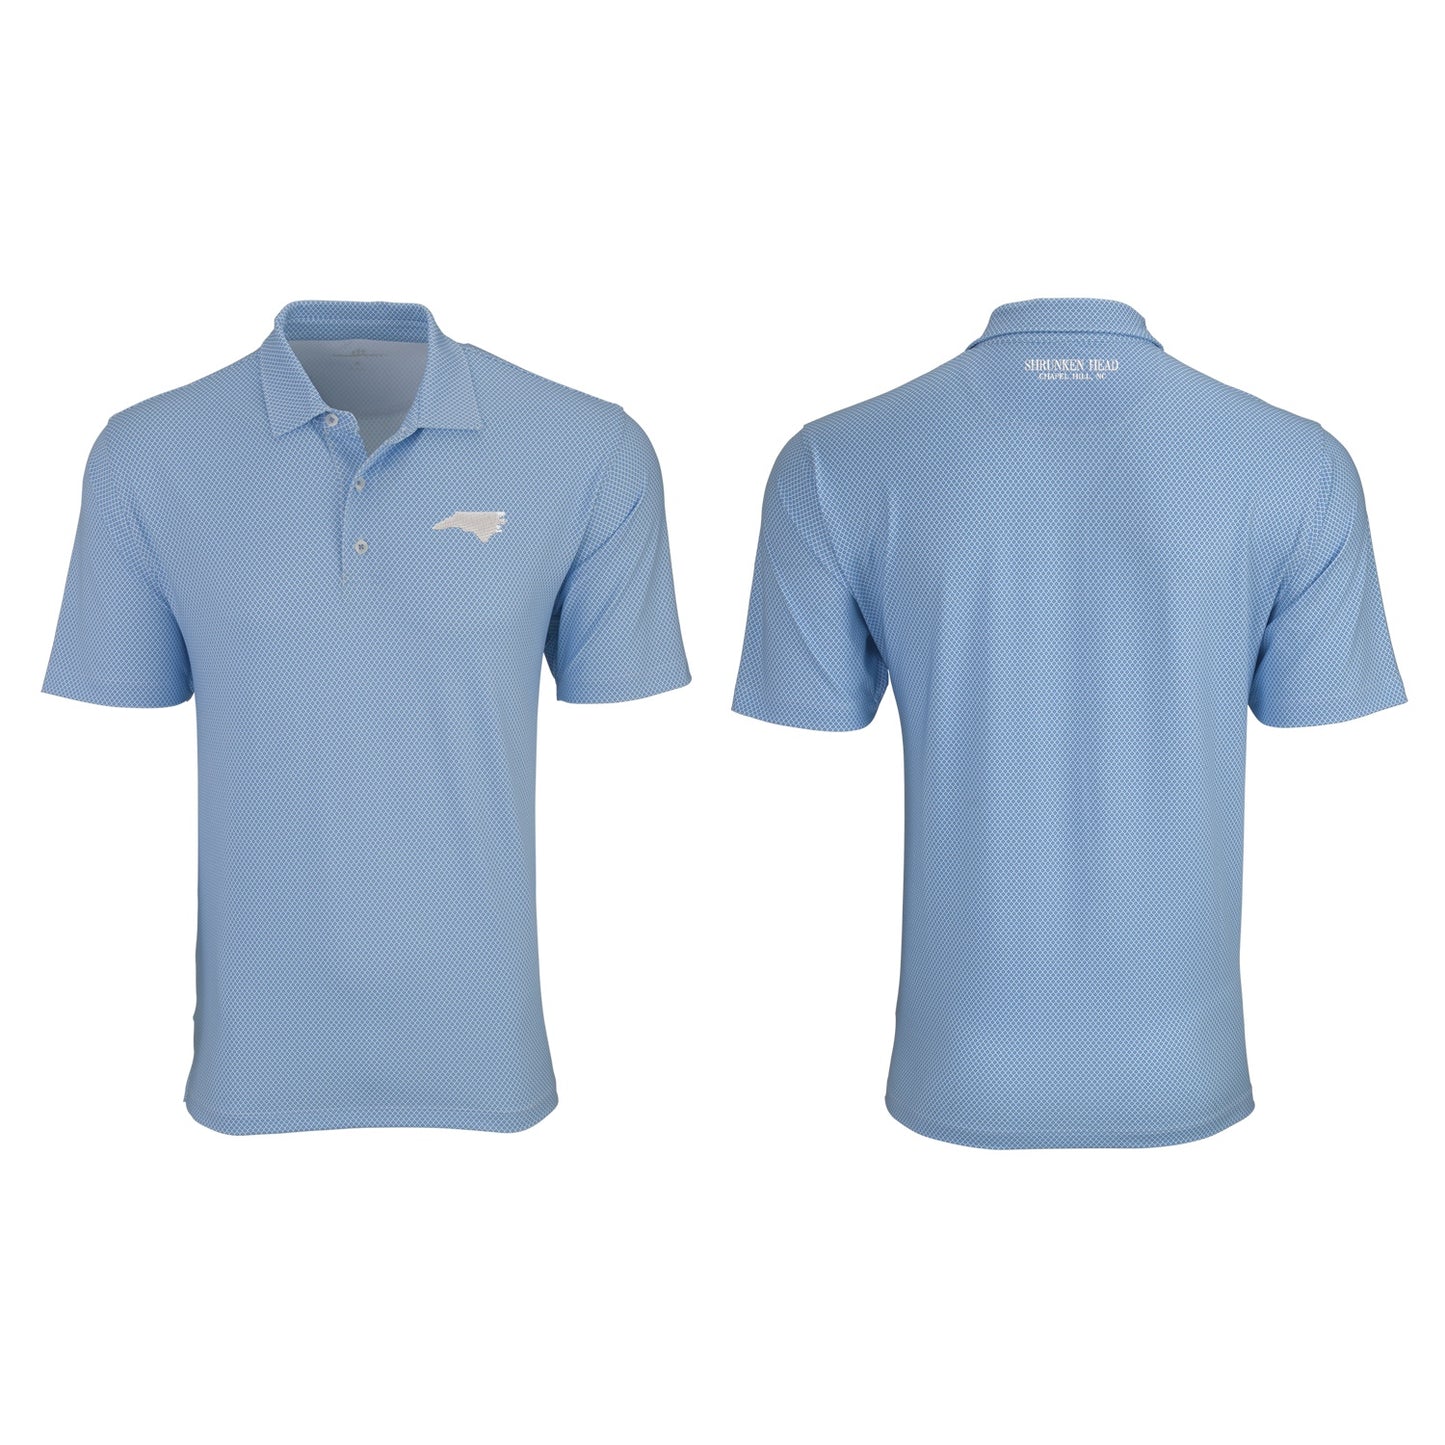 North Carolina Blue Polo Shirt for Men Pro Eagle Print